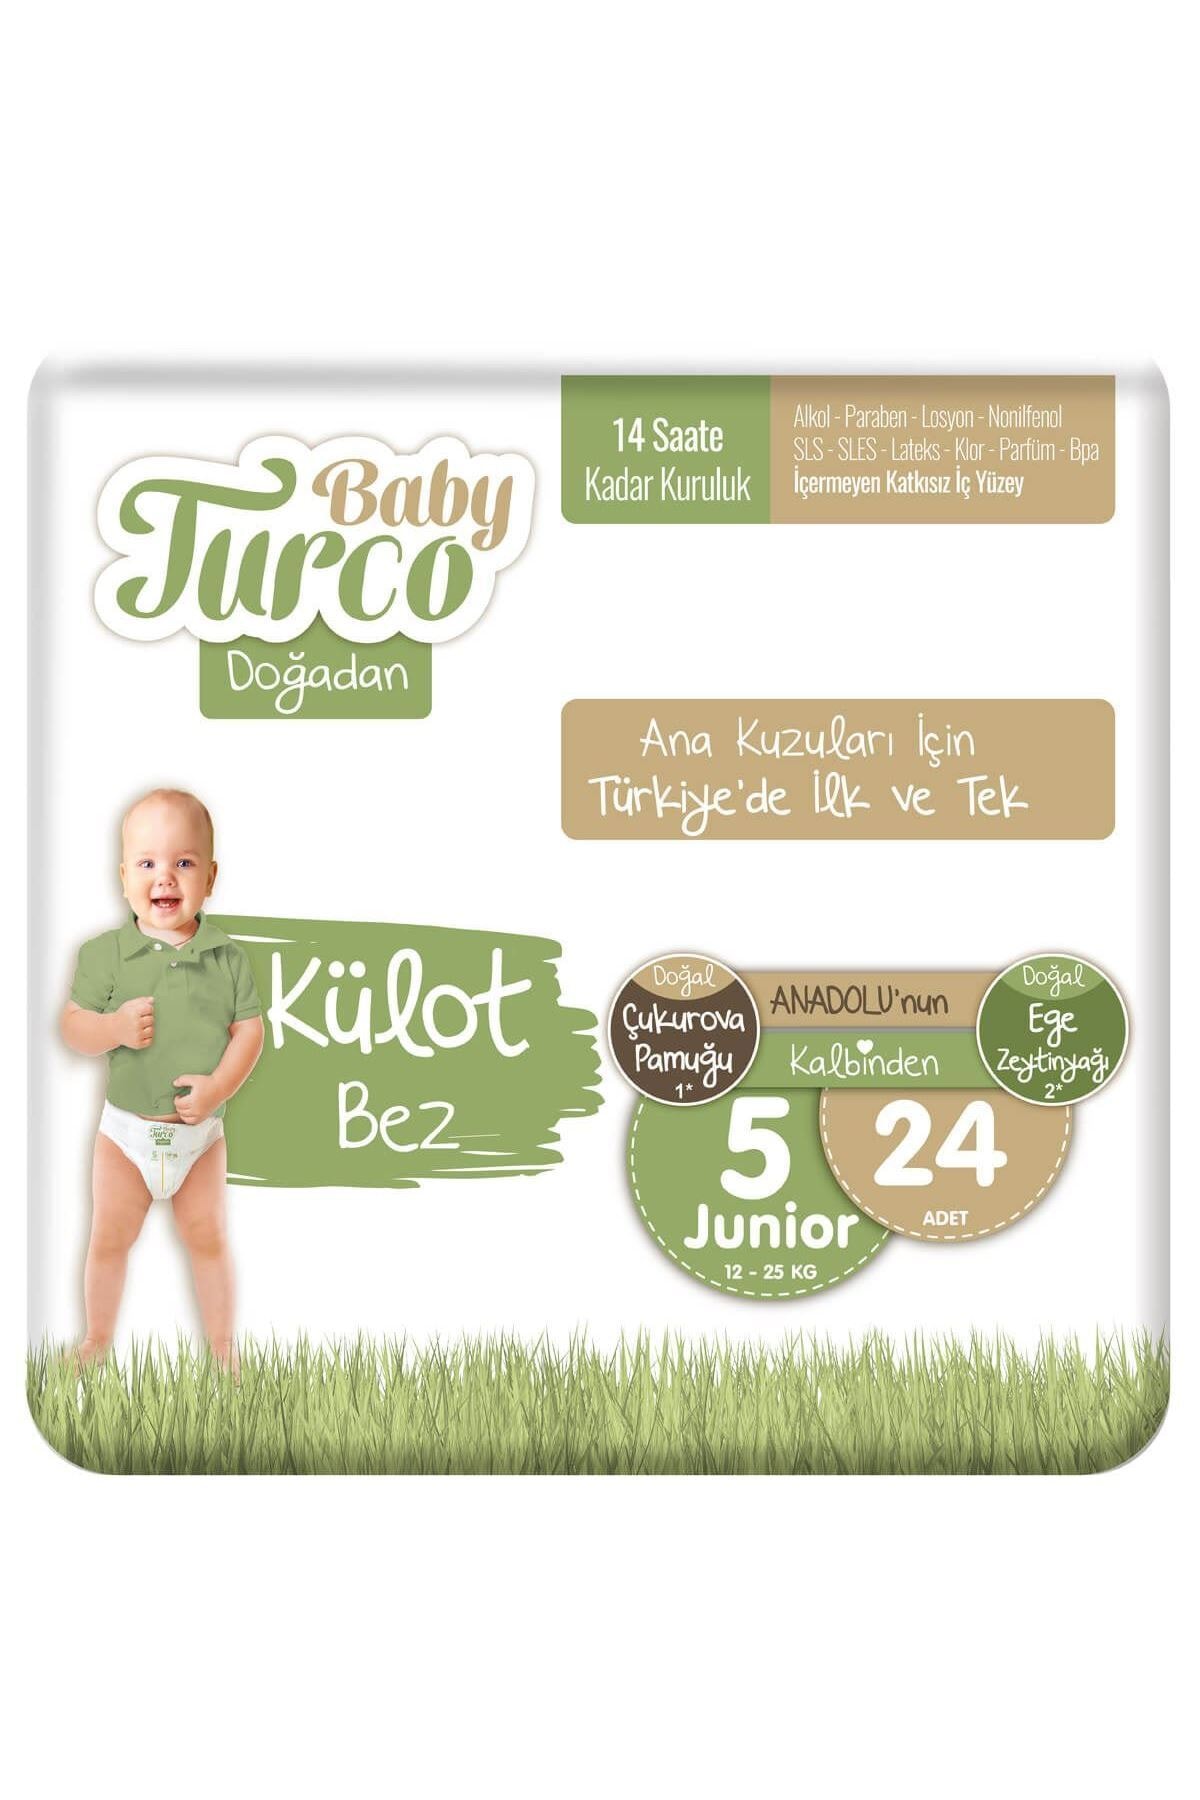 Baby Turco Doğadan Külot Bez 5 Numara Junıor 24 Adet